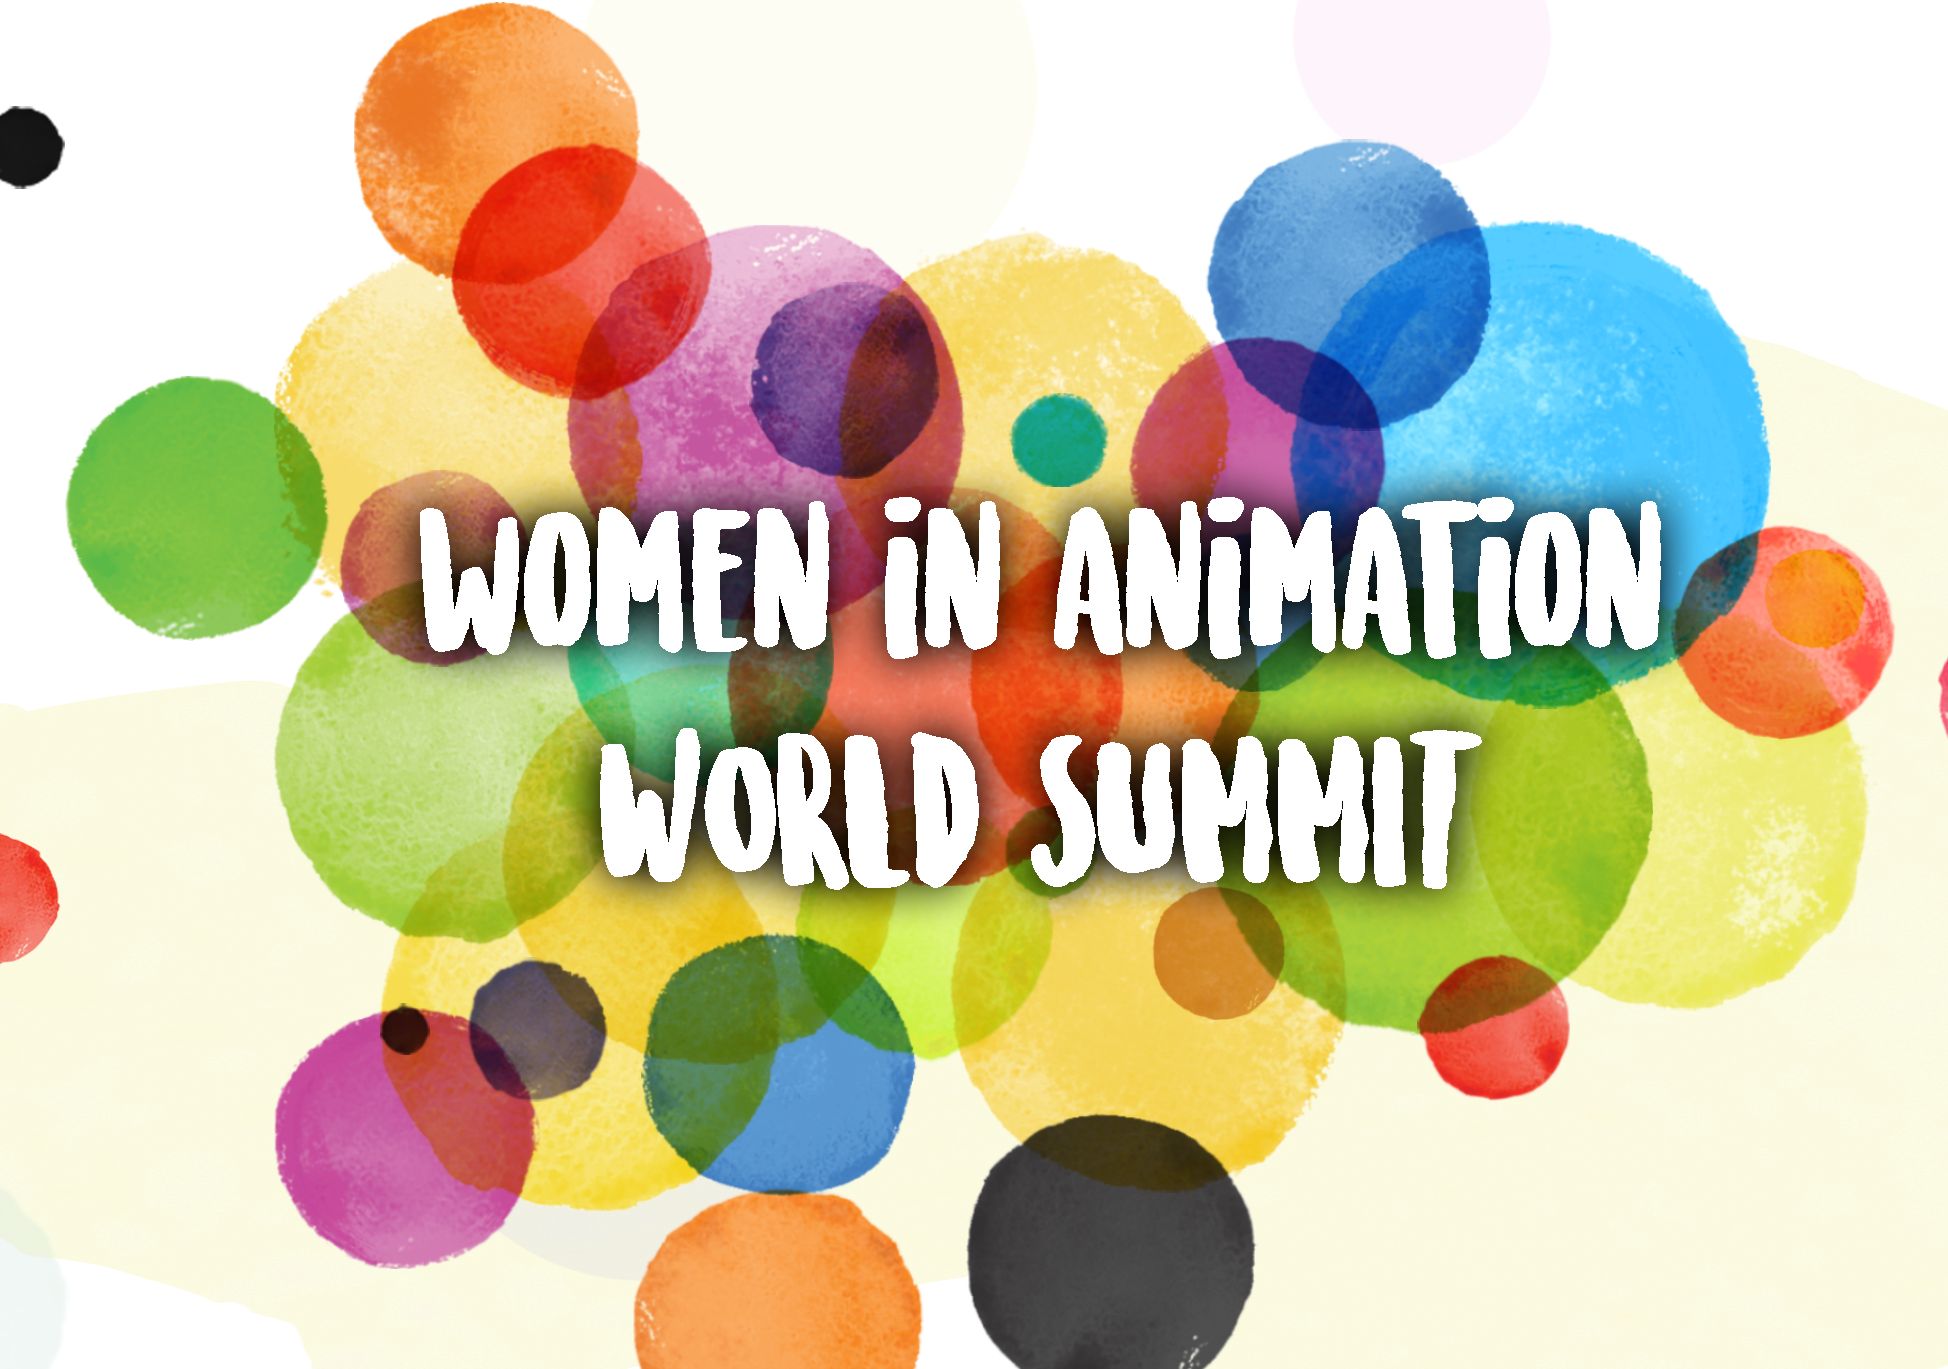 Women in Animation World Summit logo